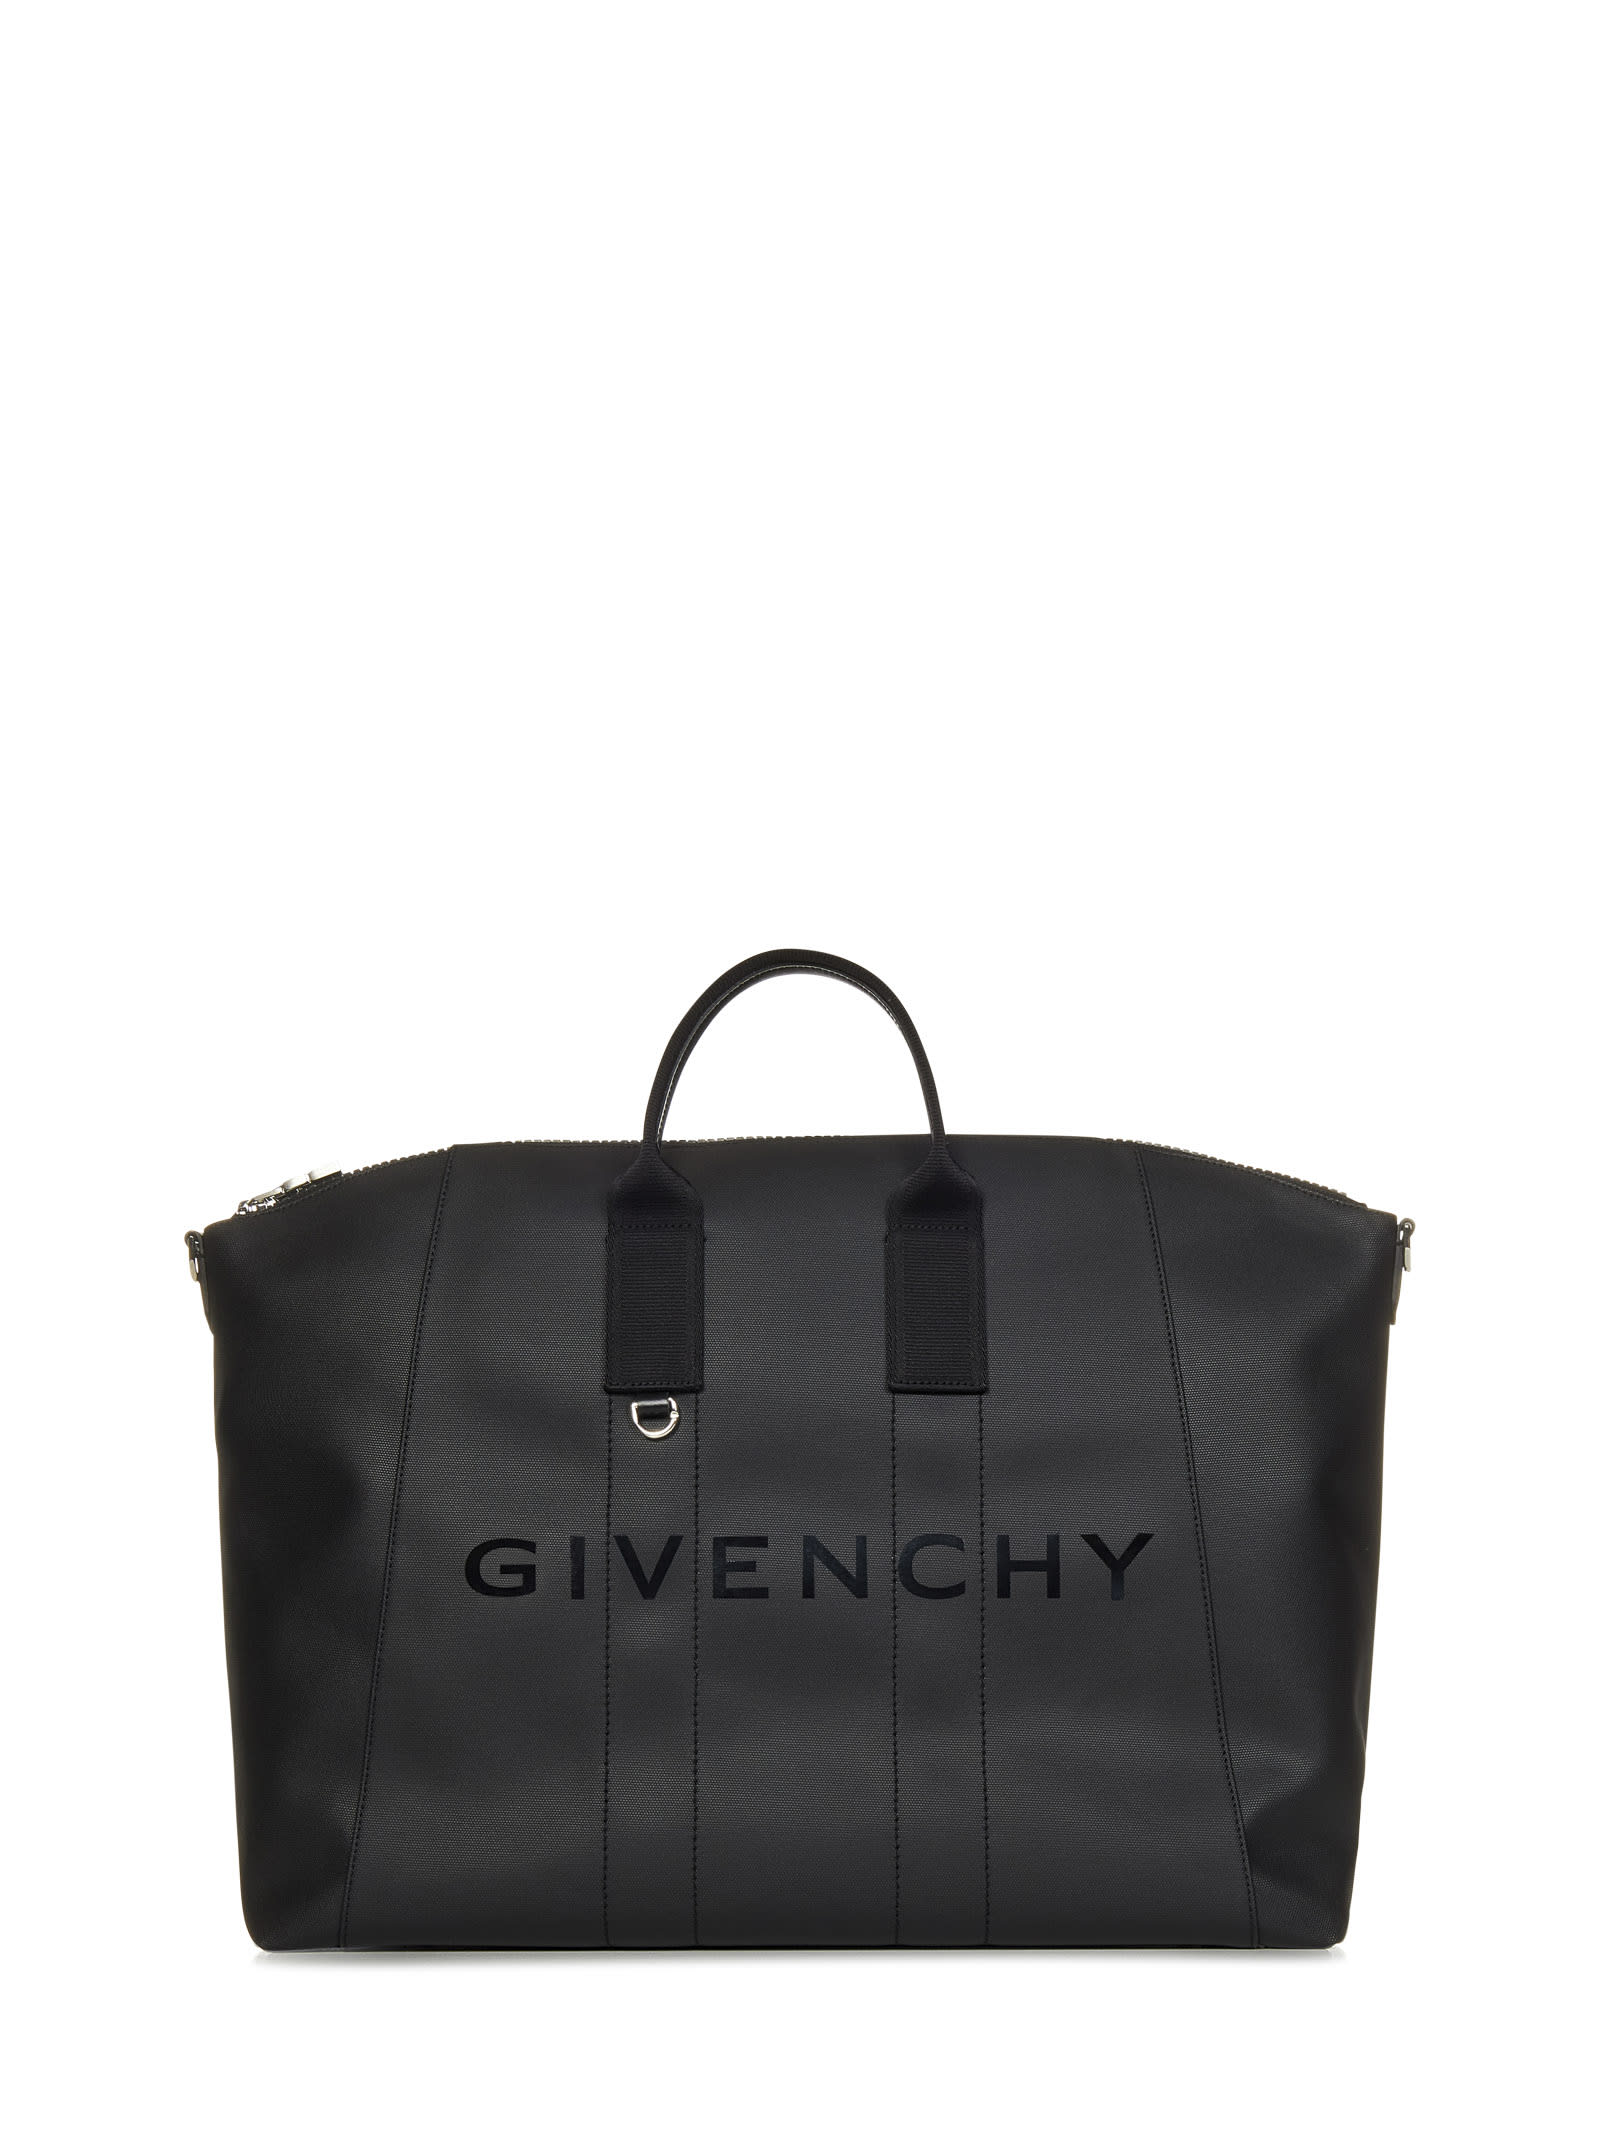 Givenchy Antigona Sport Medium Tote